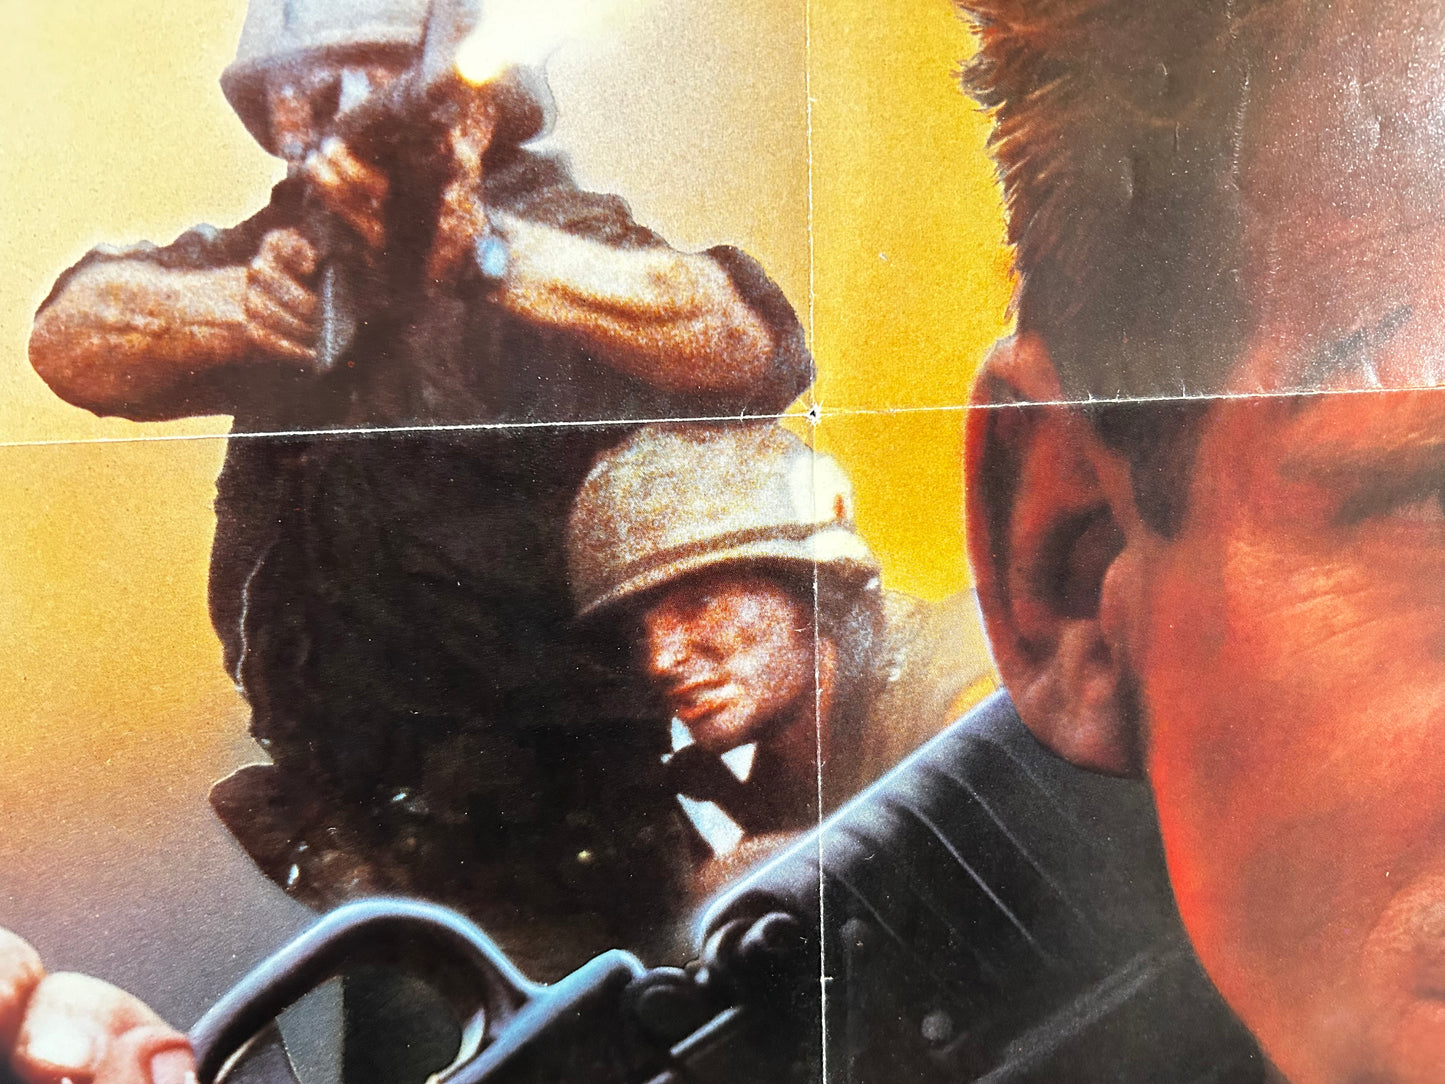 Platoon Leader Original One Sheet Poster 1988